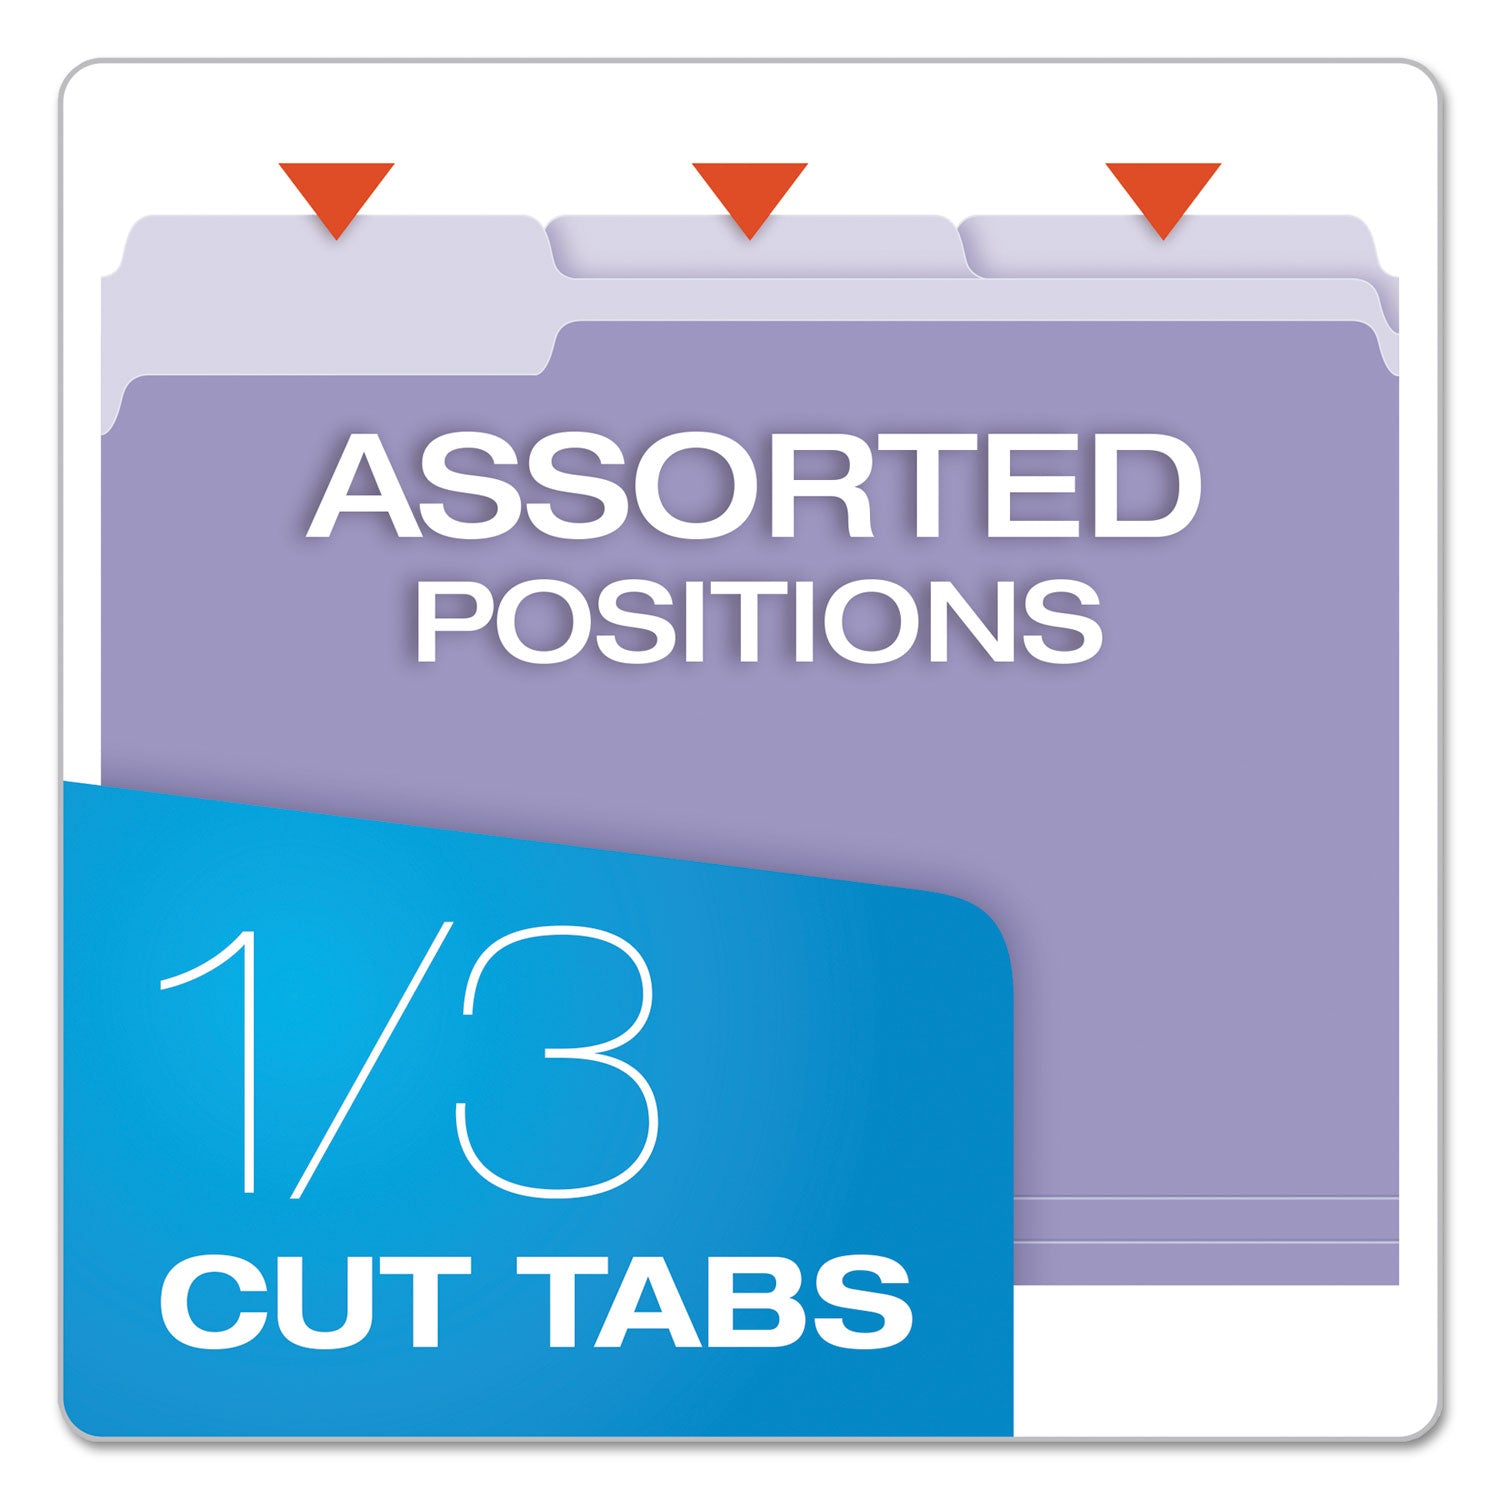 Colored File Folders, 1/3-Cut Tabs: Assorted, Letter Size, Lavender/Light Lavender, 100/Box - 